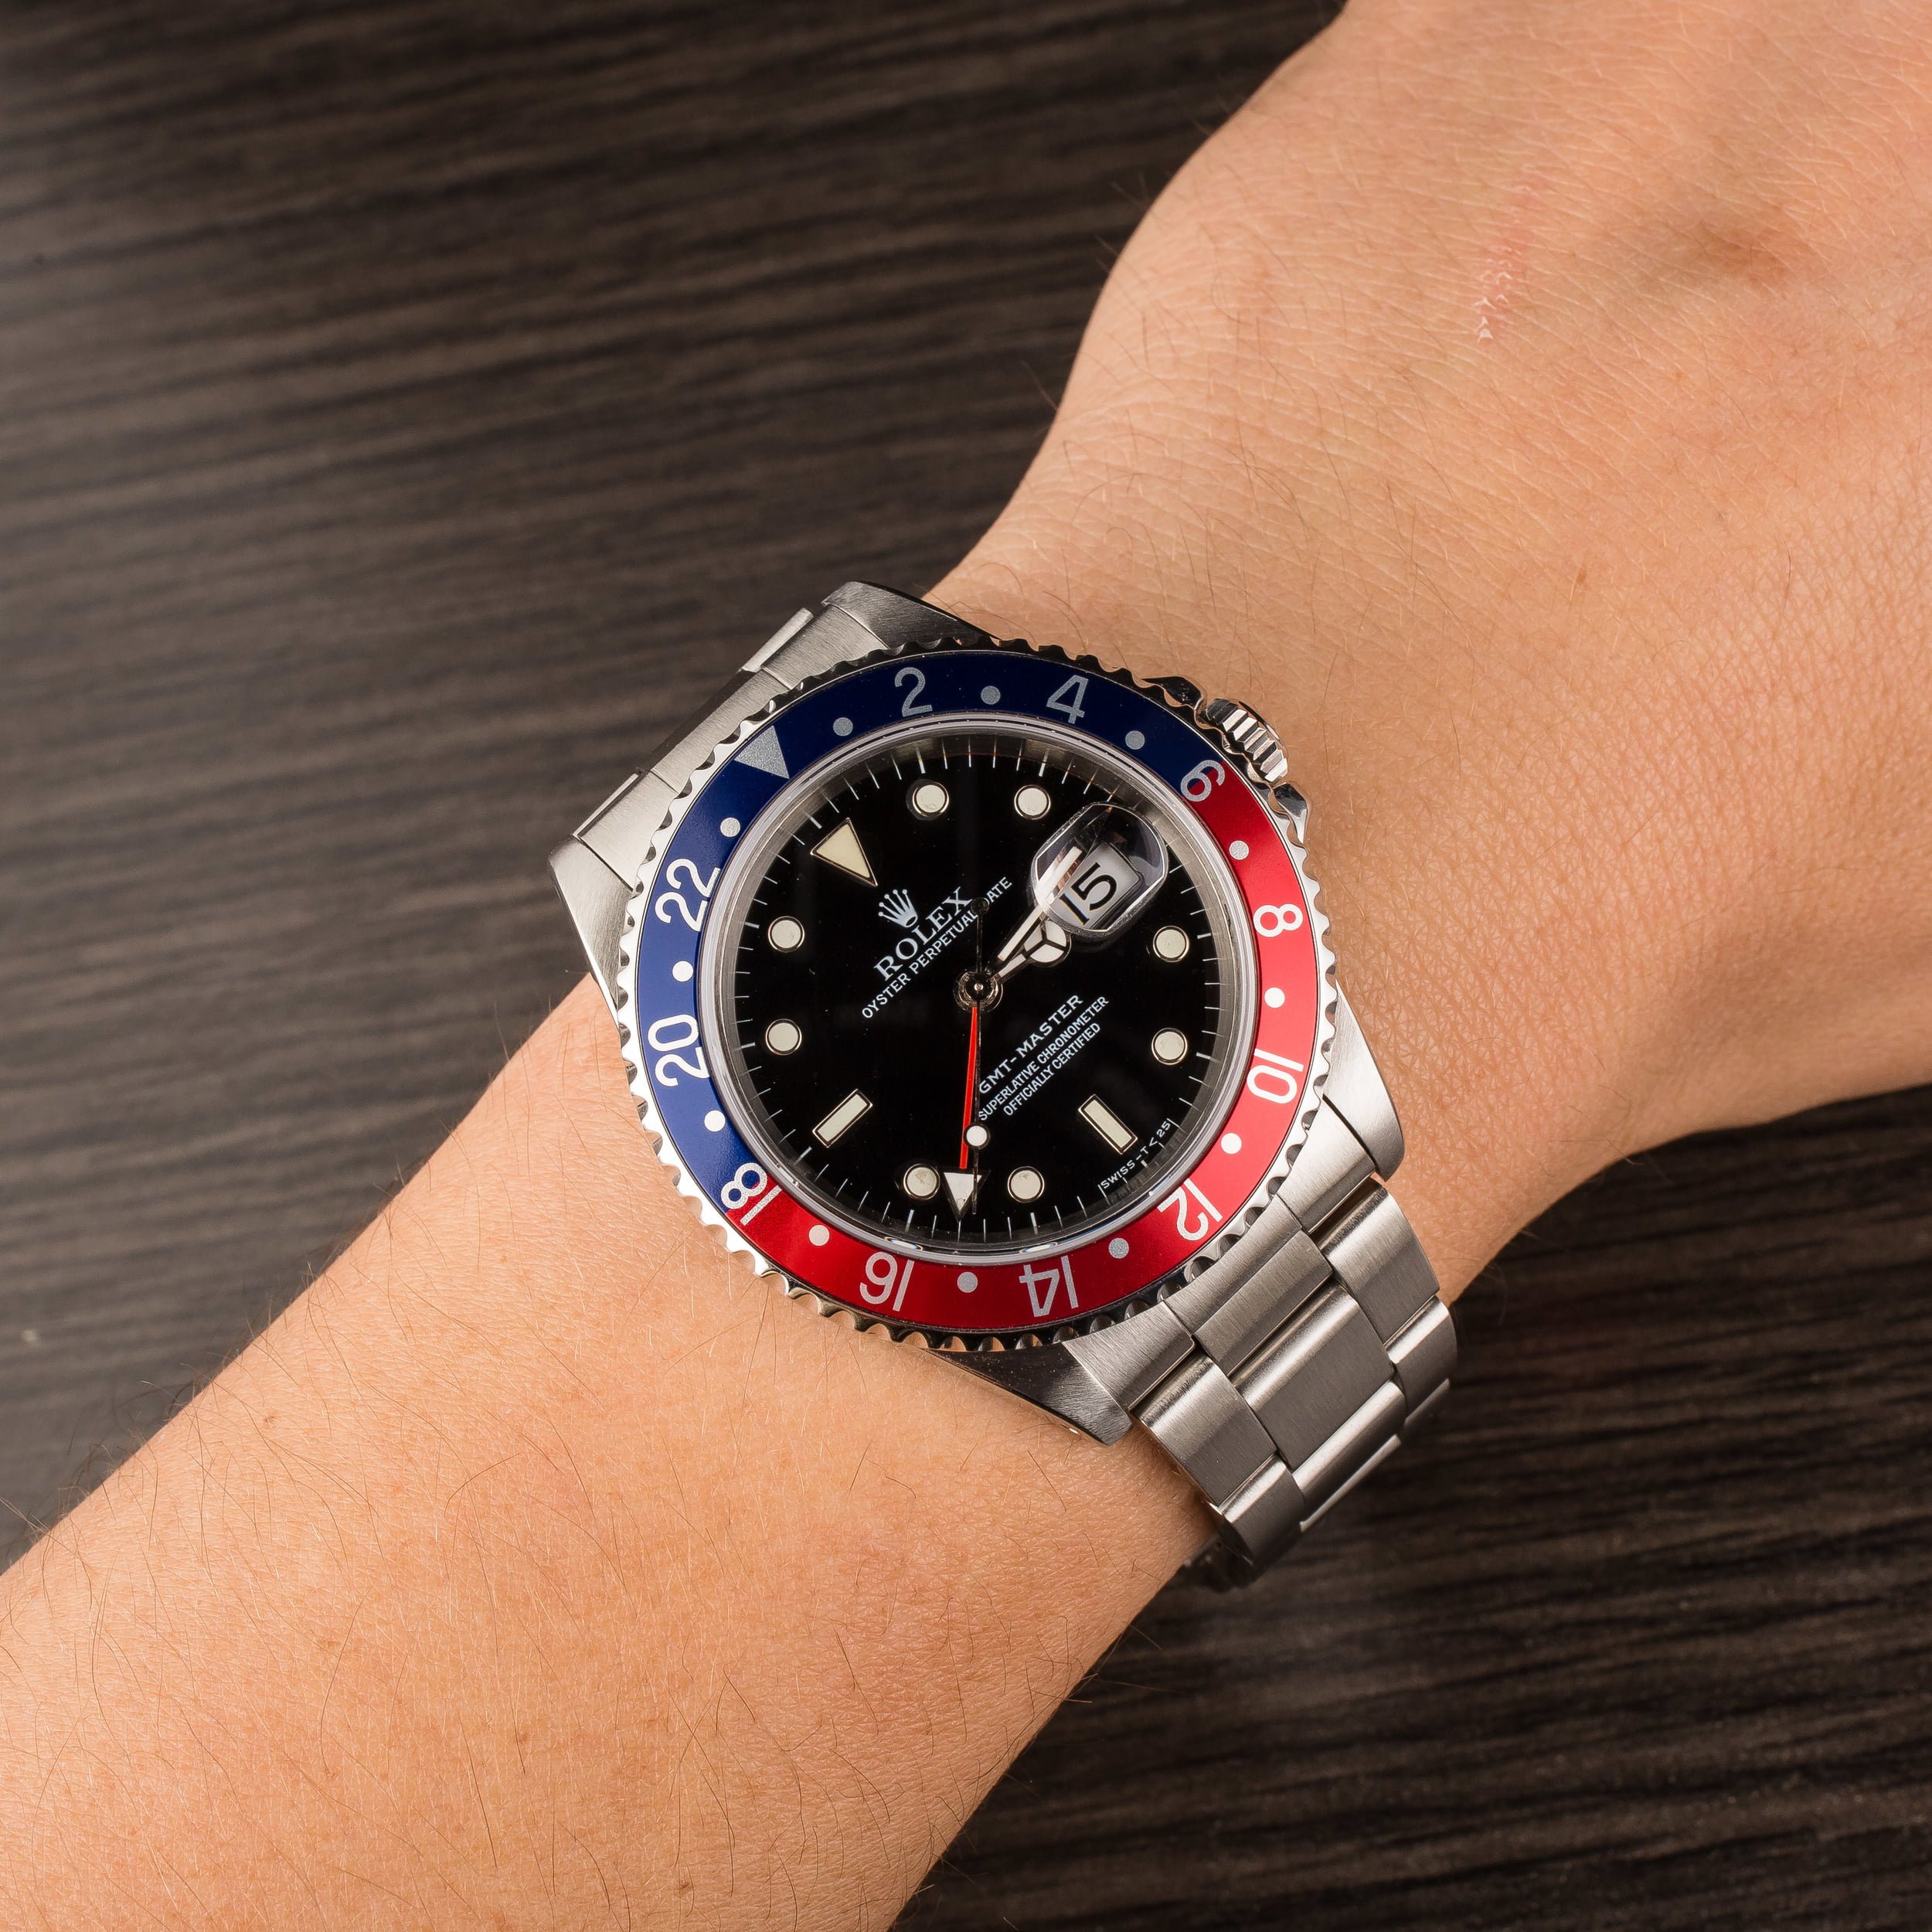 Buy Used Rolex Submariner | Bob's Watches - Sku: